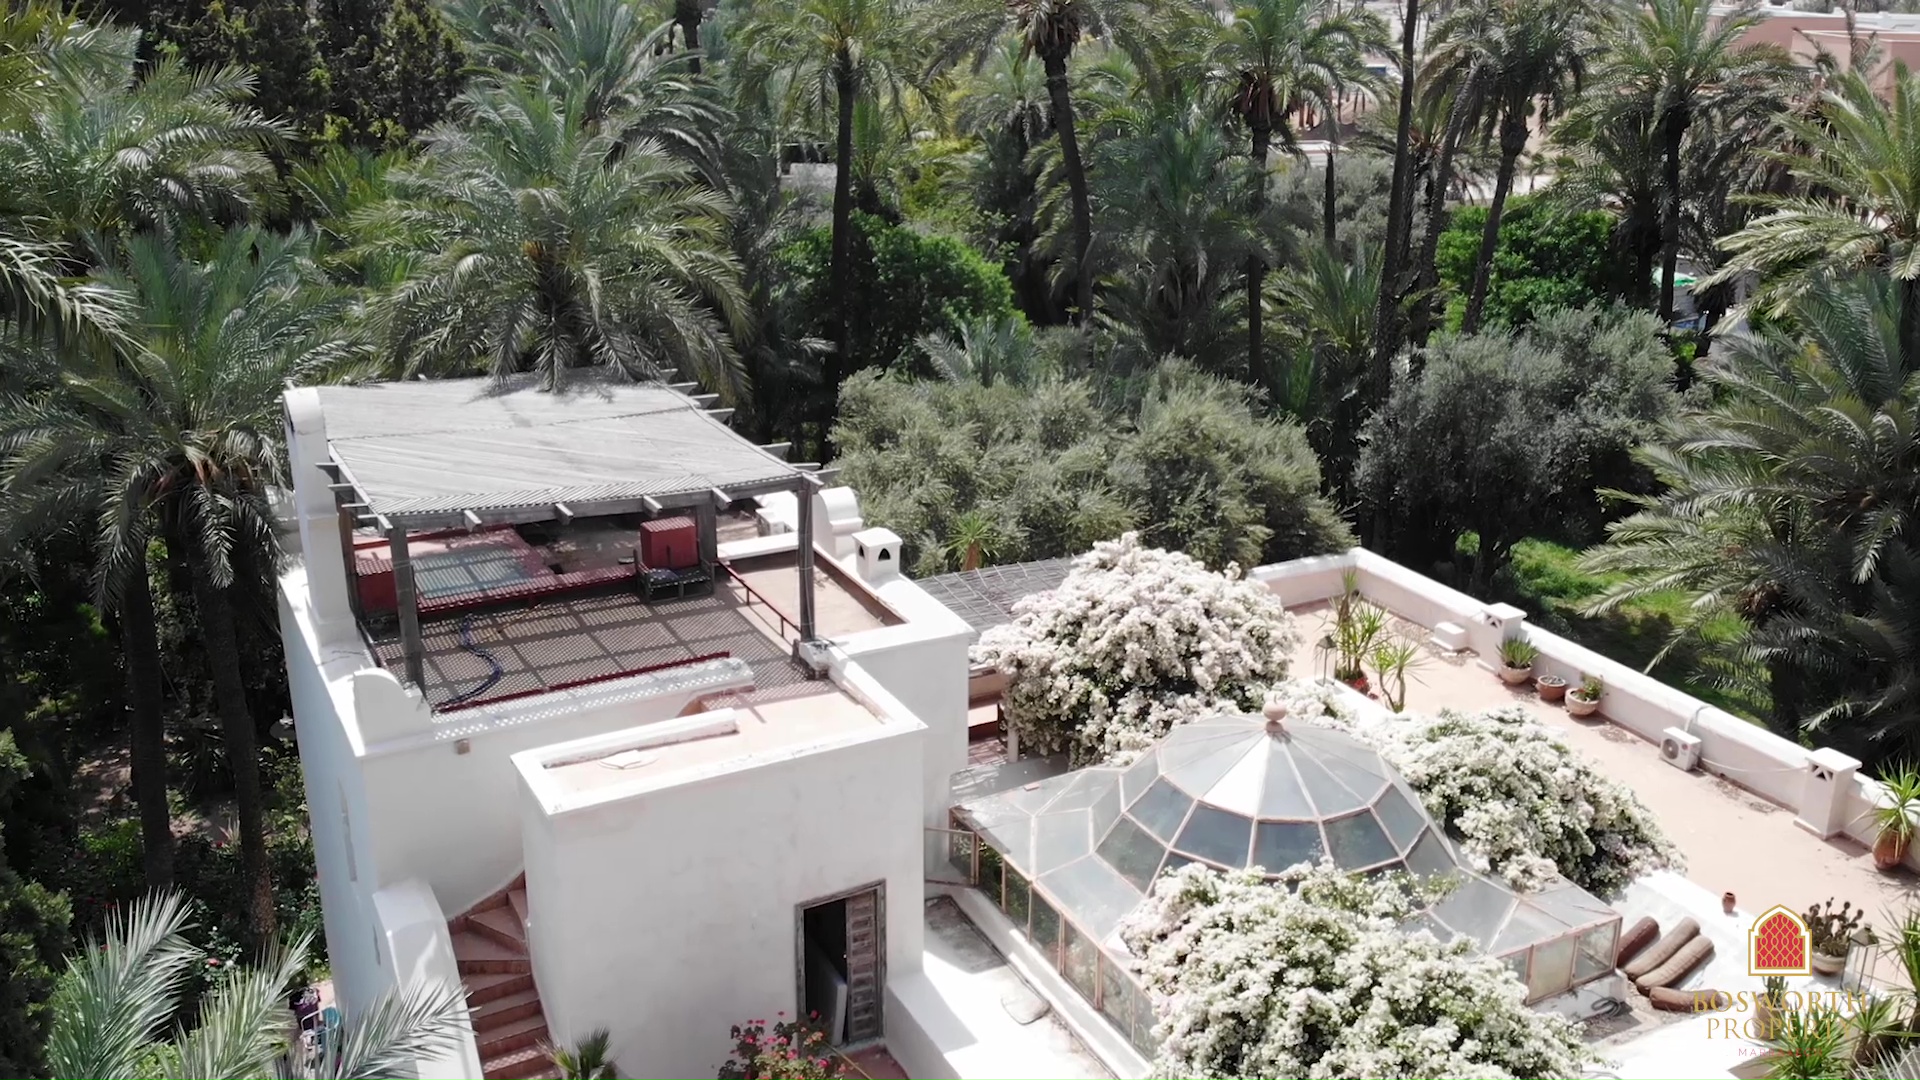 Historic Luxury Villa For Sale Marrakech Palmeraie - Luxury Marrakech Property - Villa For Sale Marrakech - Marrakech Real Estate - Marrakesh Realty - immobilier marrakech - villa a vendre marrakech